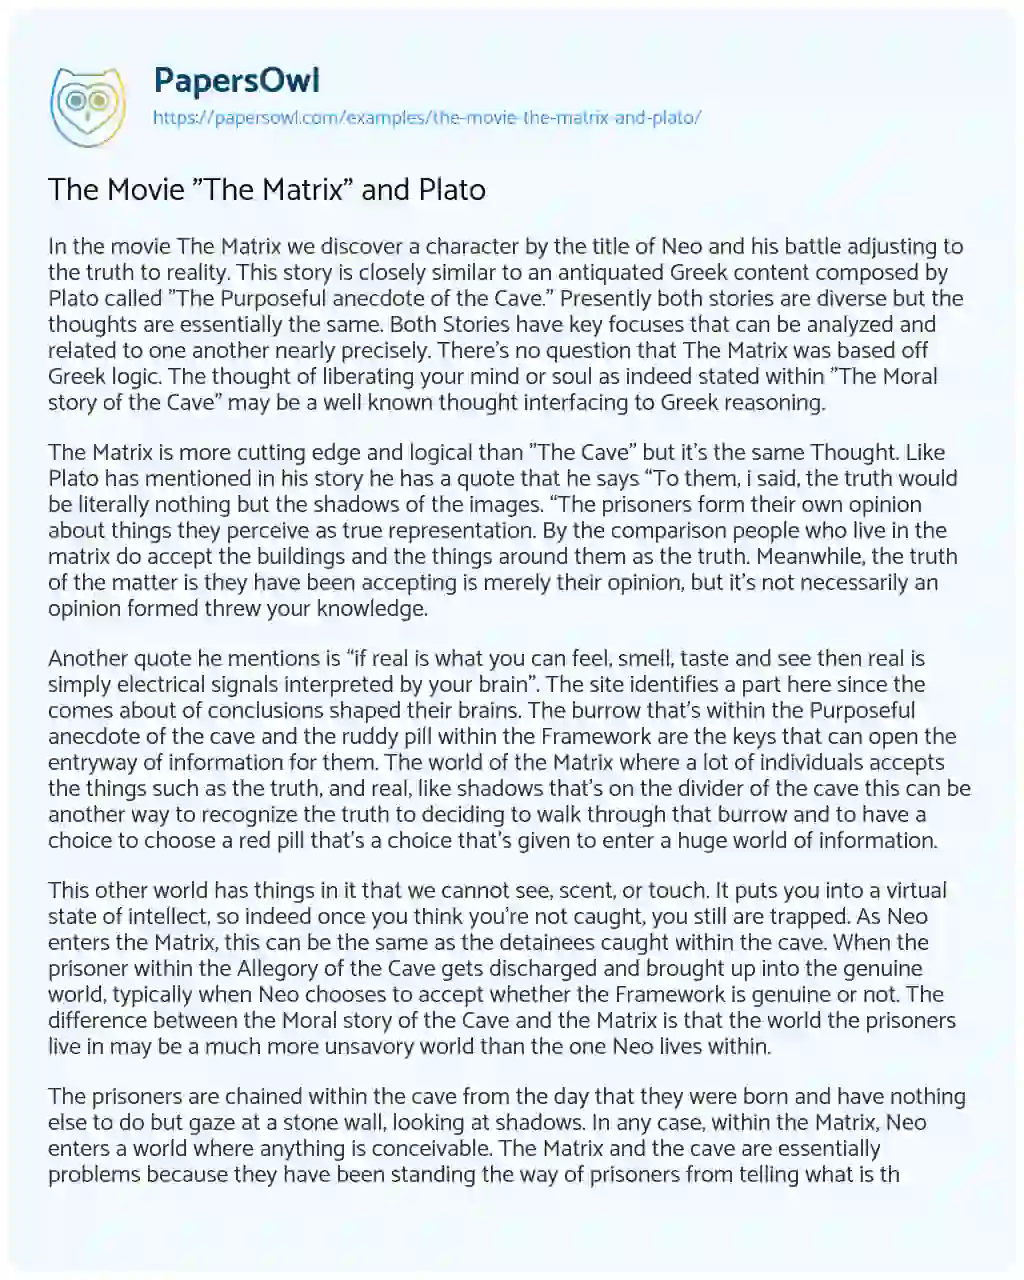 Essay on The Movie “The Matrix” and Plato